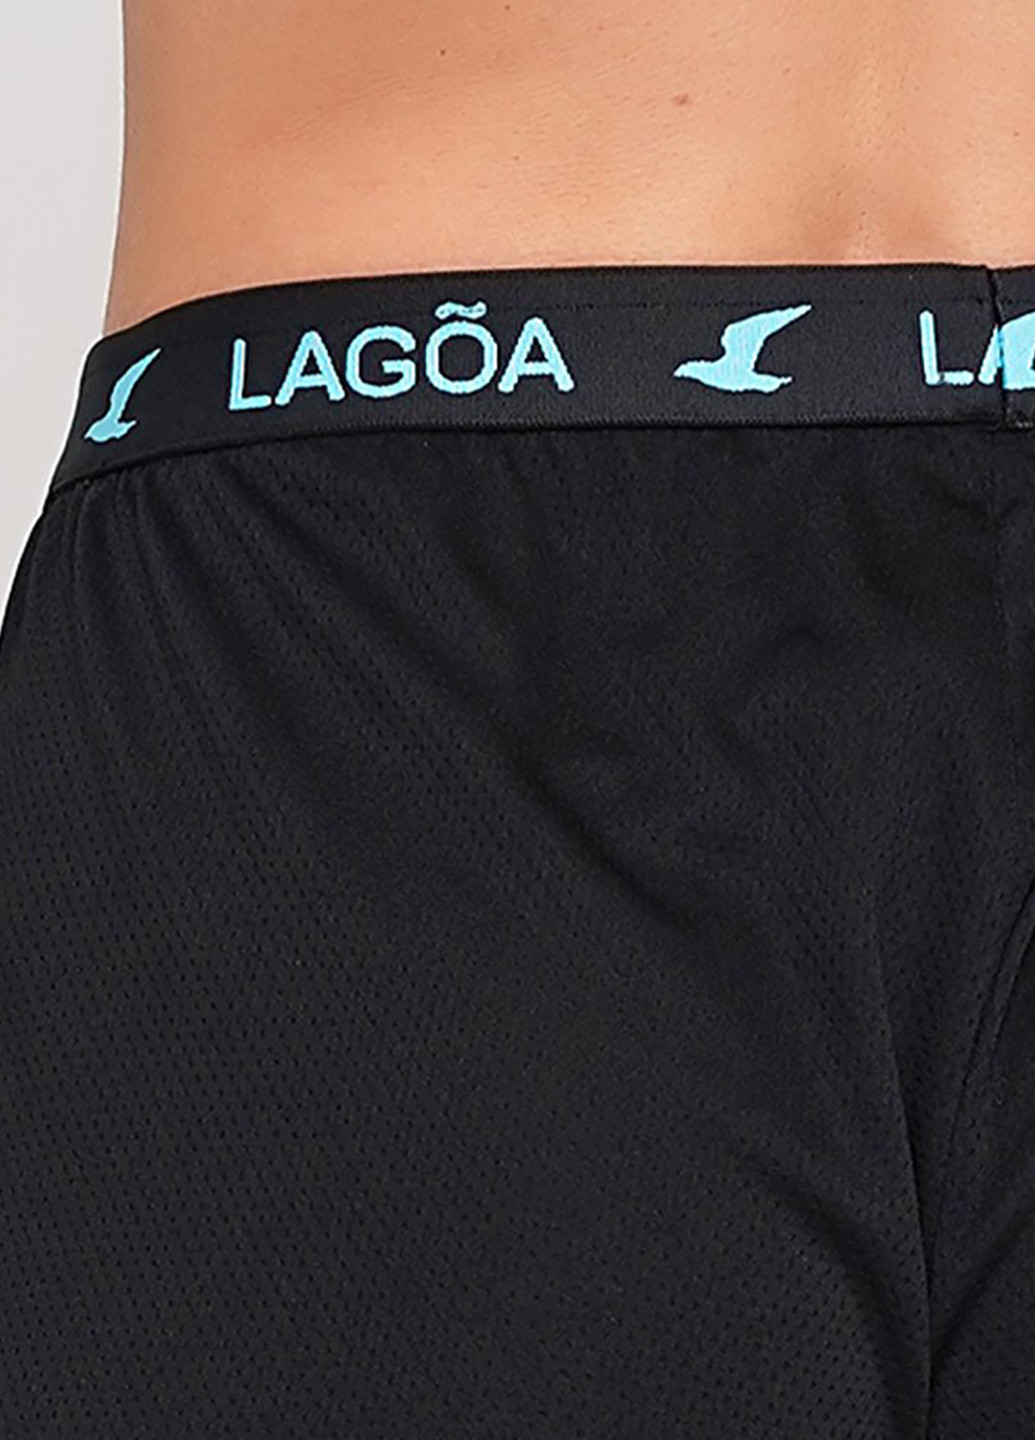 Шорты Lagoa women's mesh shorts (184208724)